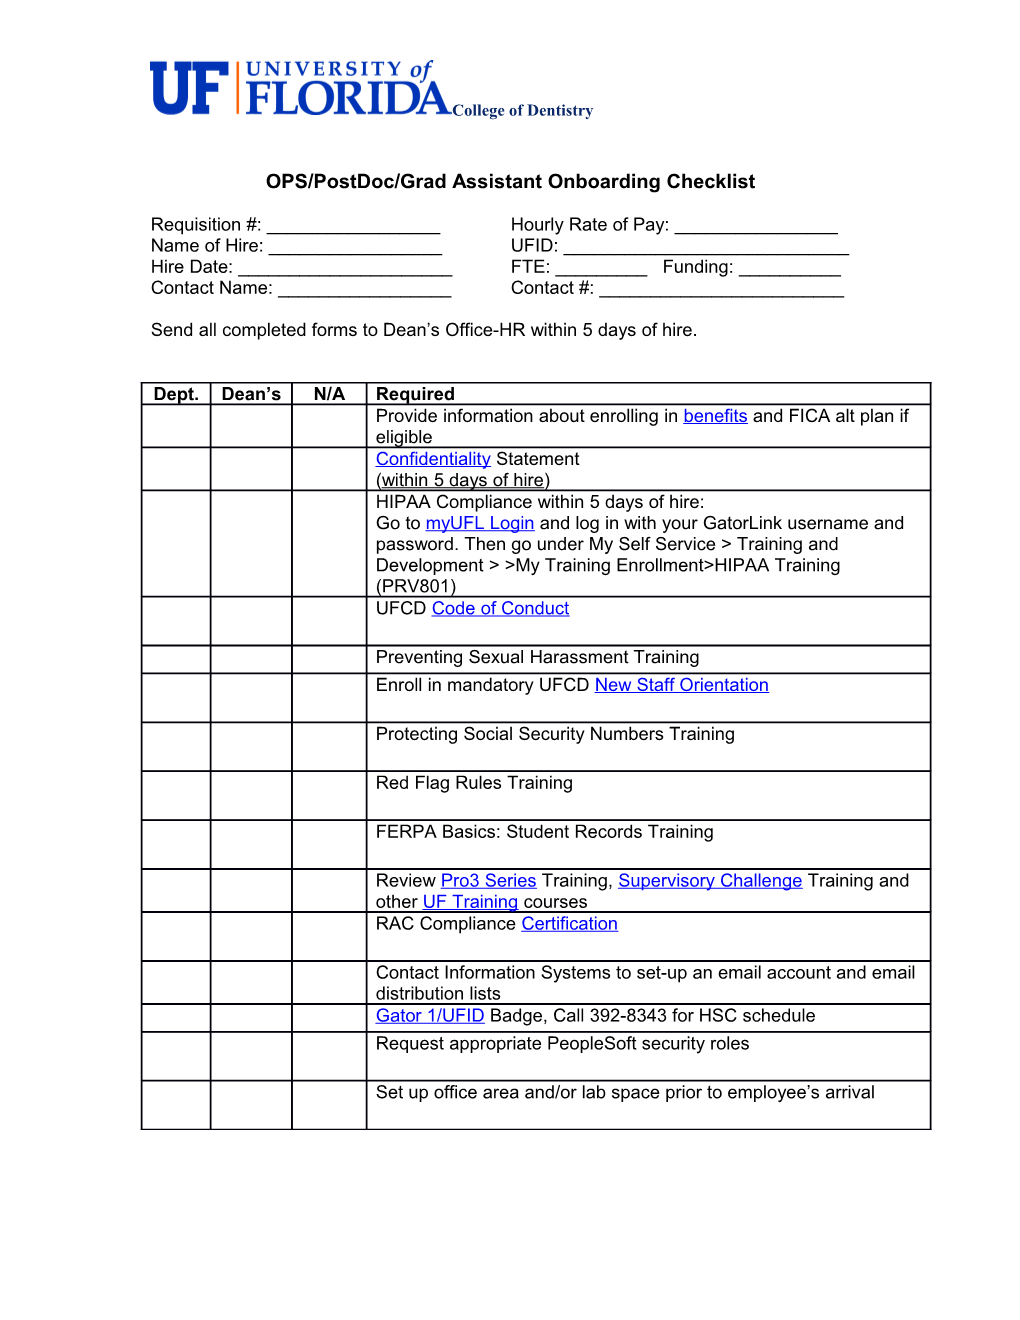 OPS/Postdoc/Grad Assistant Onboarding Checklist s1